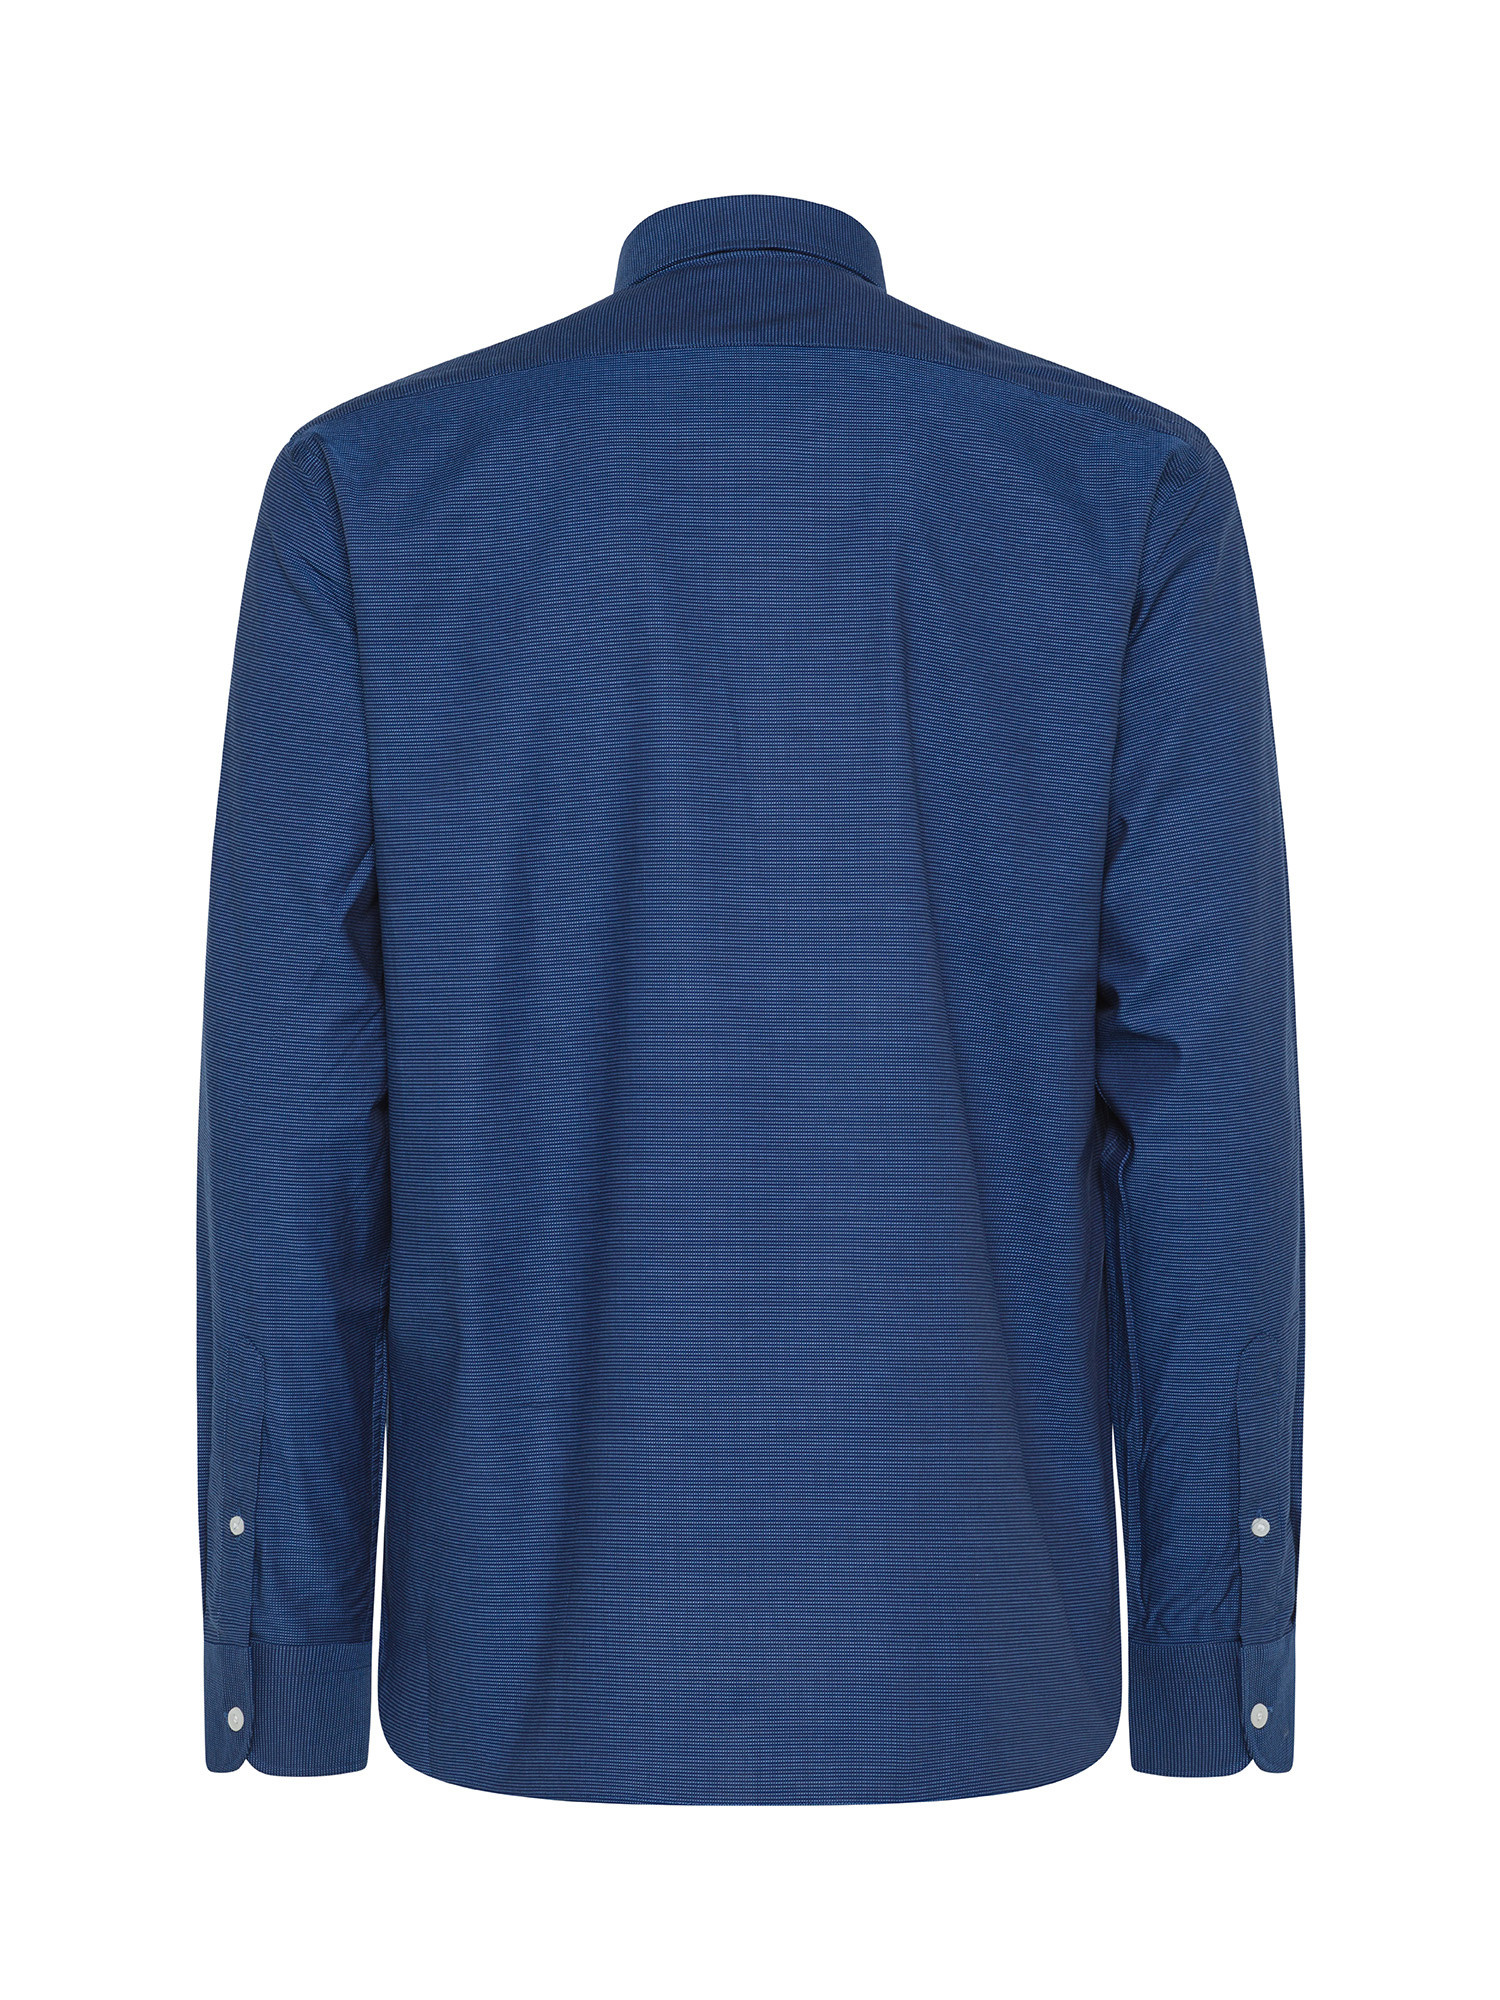 Luca D'Altieri - Tailor fit shirt in pure cotton, Blue, large image number 1